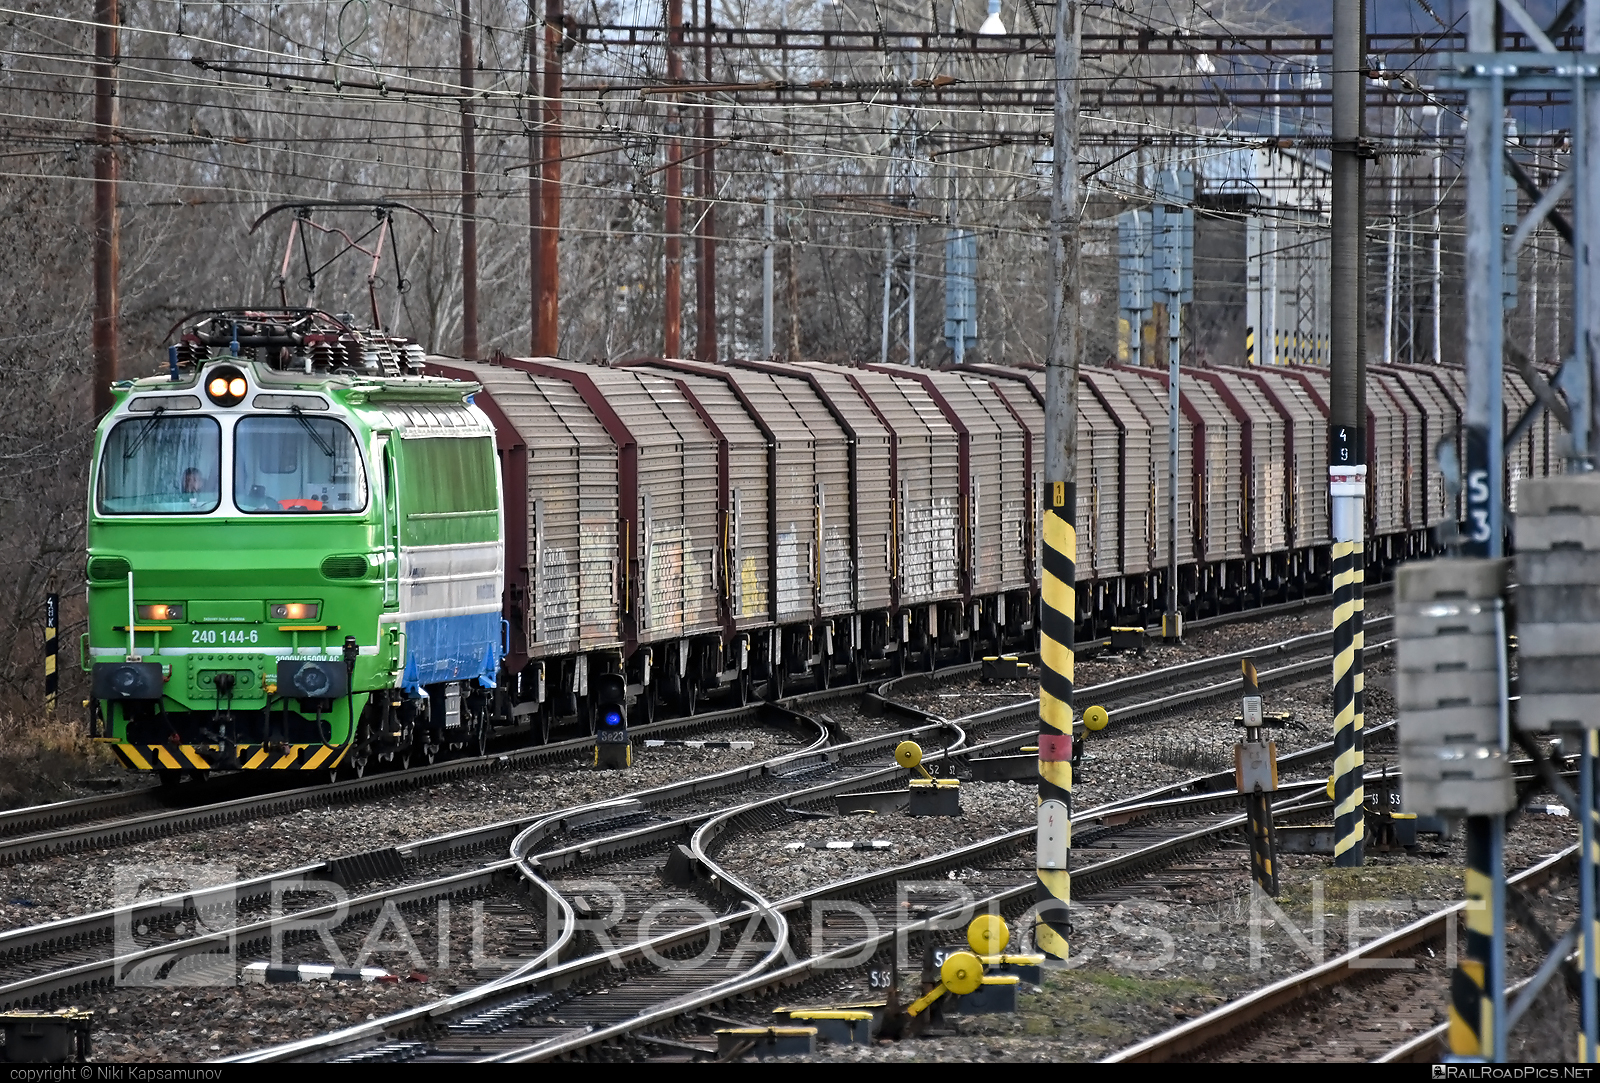 Škoda 47E - 240 144-6 operated by Railtrans International, s.r.o #RailtransInternational #coveredwagon #laminatka #locomotive240 #rti #skoda #skoda47e